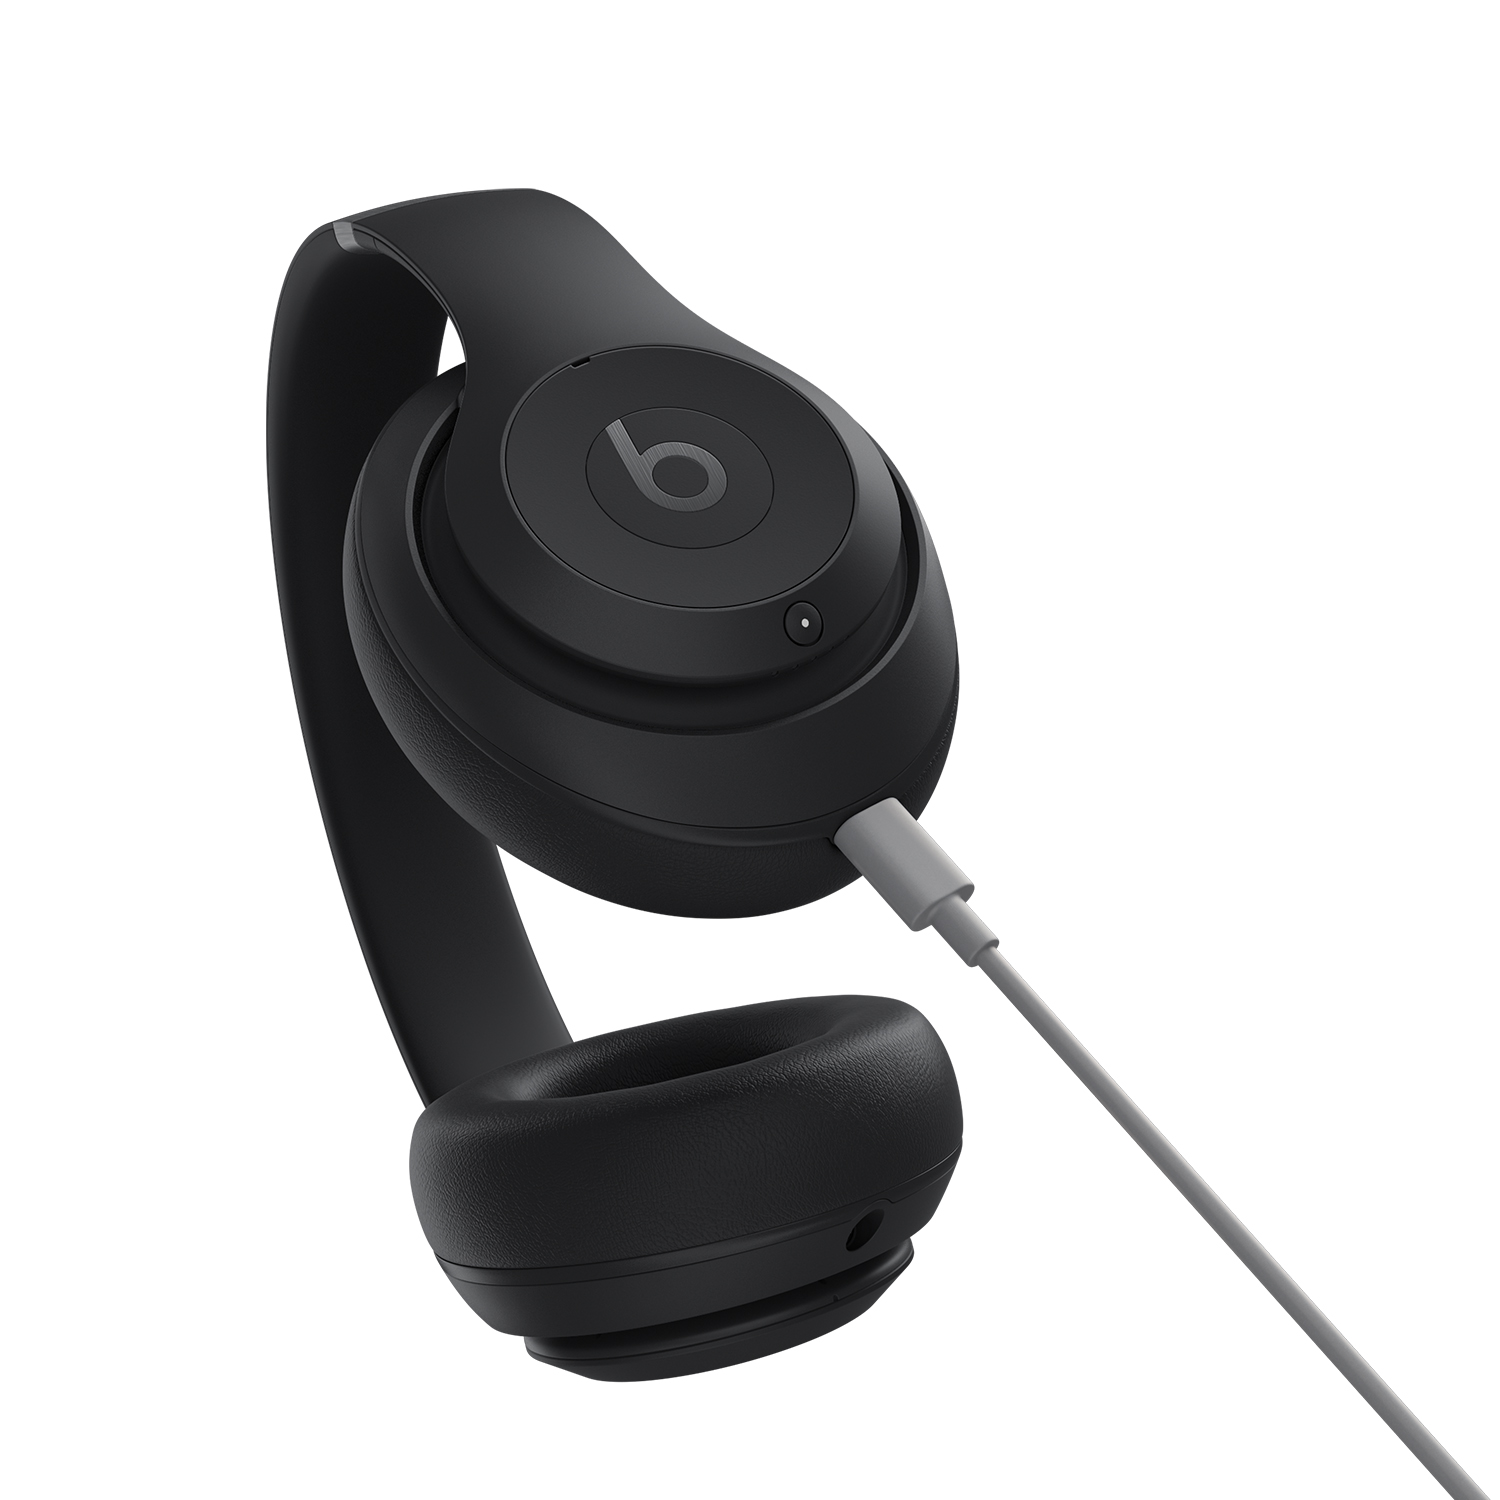 Snestorm forgænger klæde sig ud Beats Studio Pro - Premium Wireless Noise Cancelling Headphones